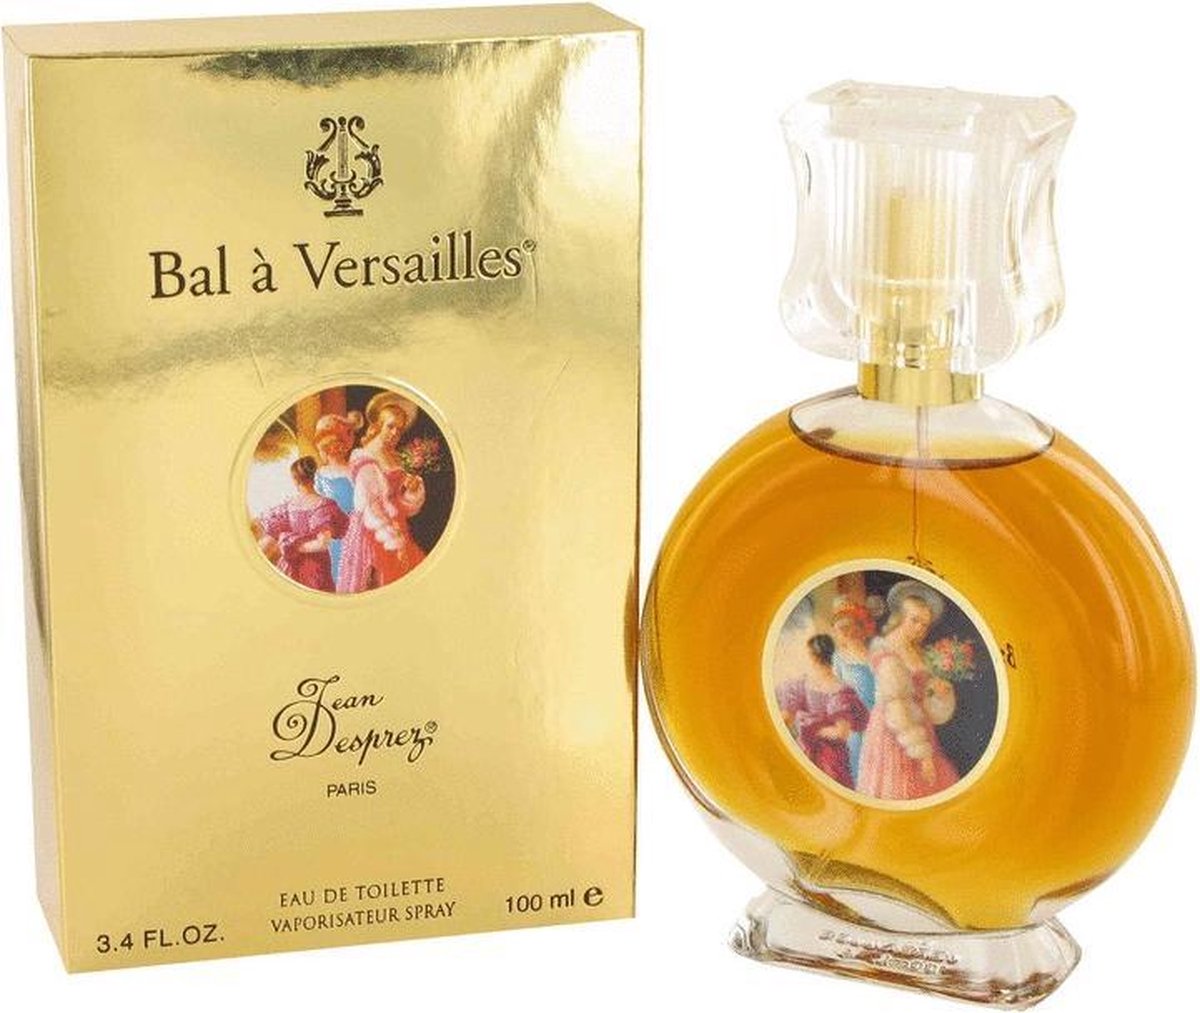 Jean Desprez Bal A Versailles - Eau de toilette spray - 100 ml